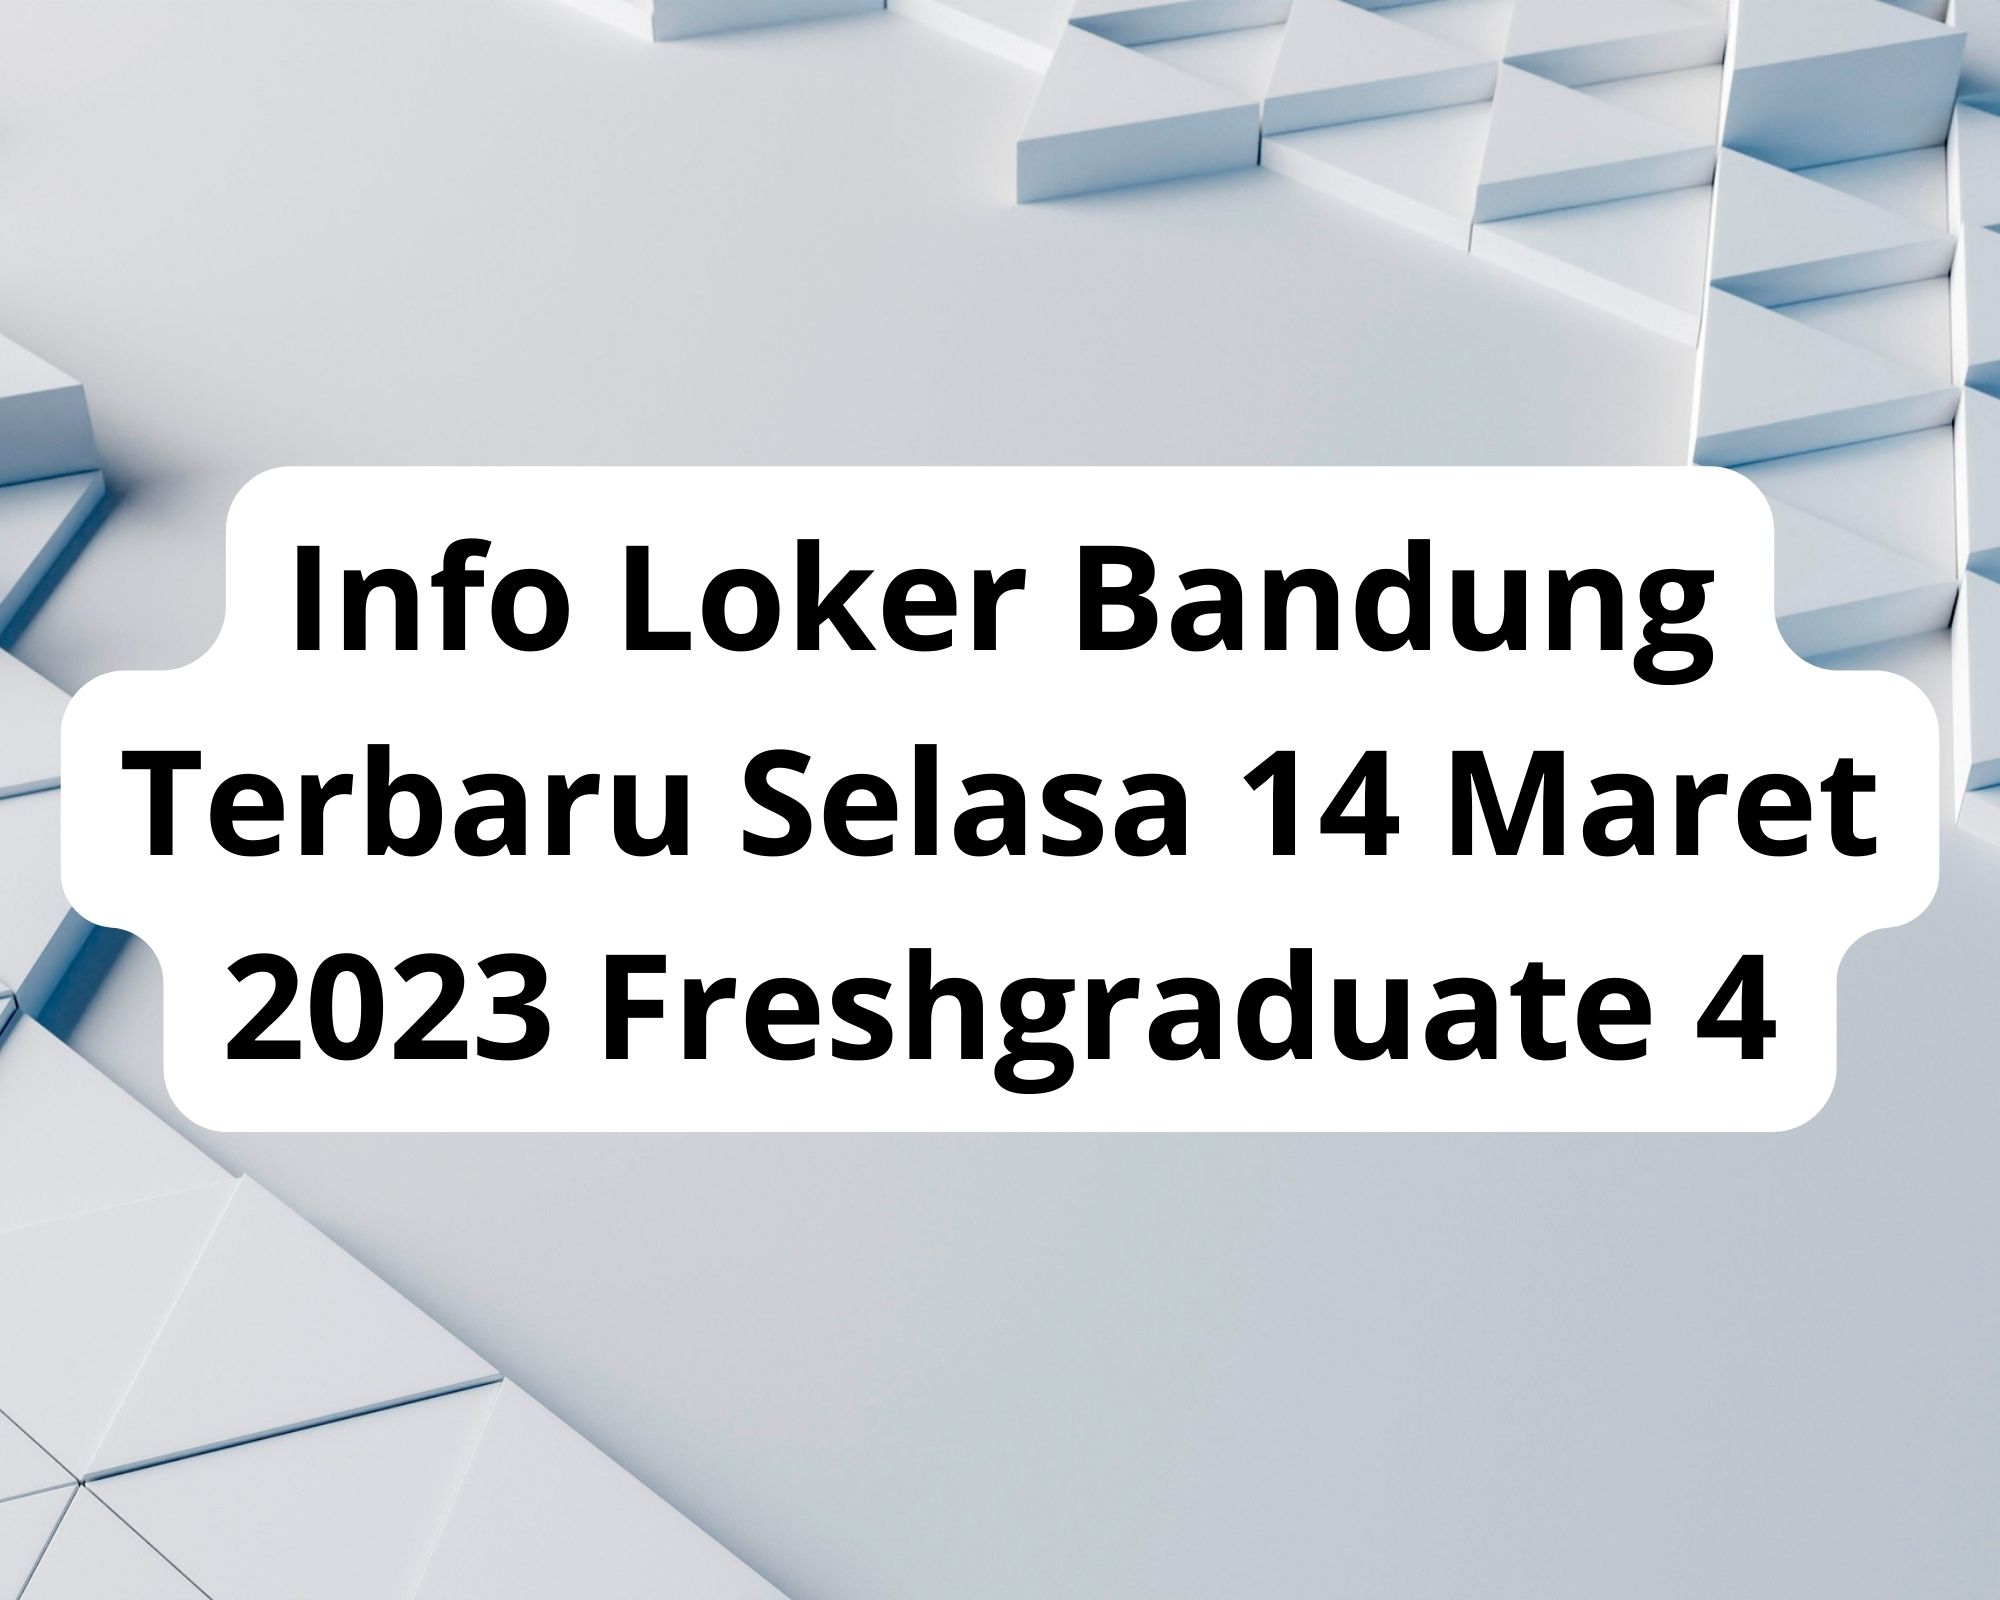 Info Loker Bandung Terbaru Selasa 14 Maret 2023 Freshgraduate 4